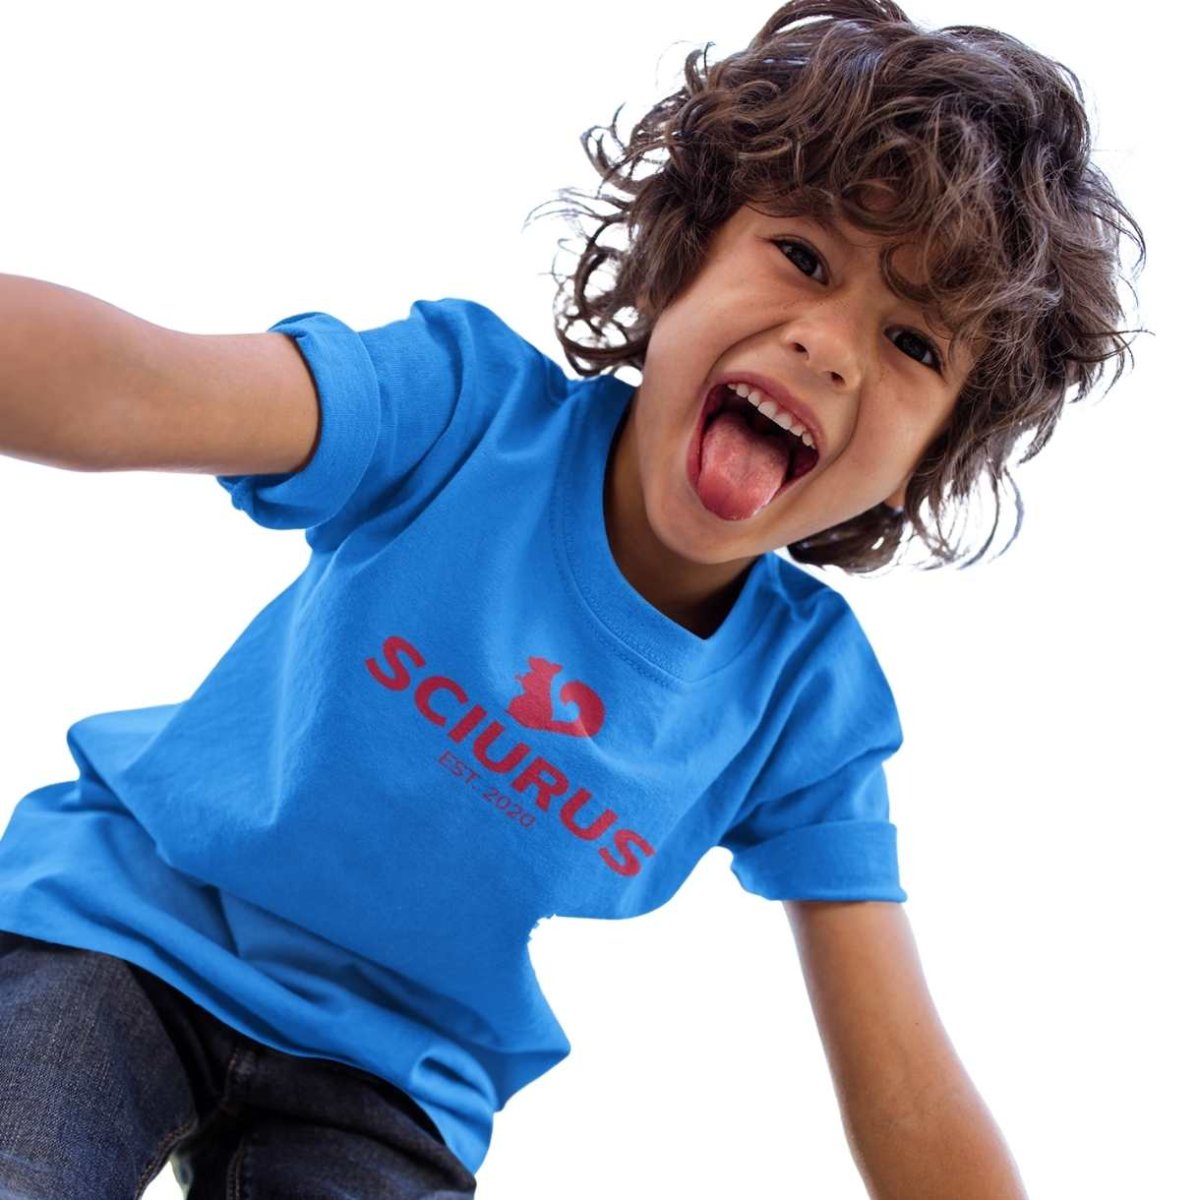 Foreman Ray kedel SCIURUS KIDS ikoniske T-shirt til drenge i blå med rødt tryk - Dreng -  Sciurus.dk